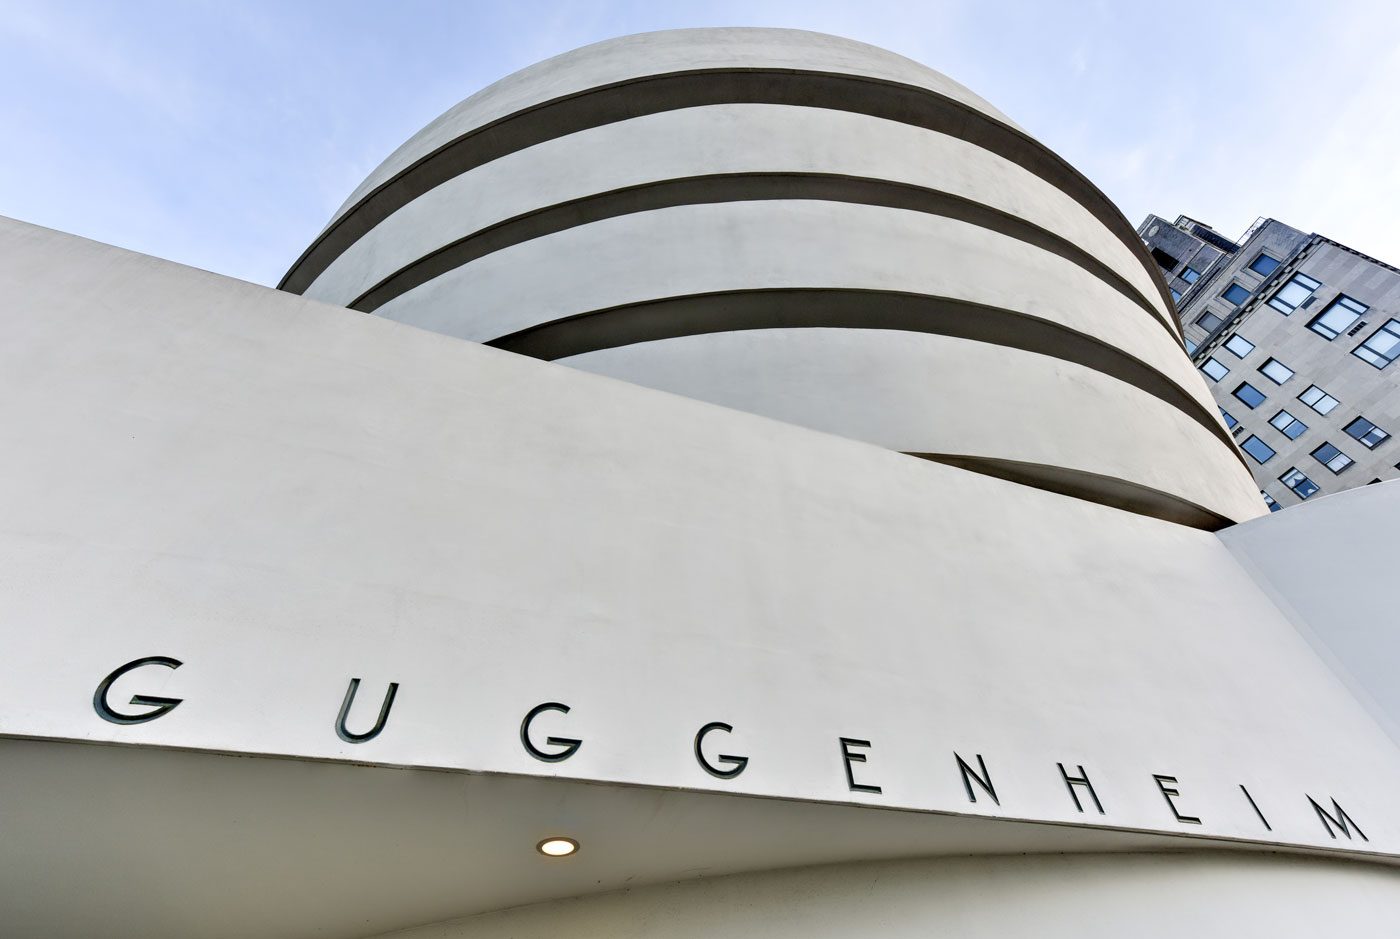 Exterior of the Guggenheim Museum in New York City